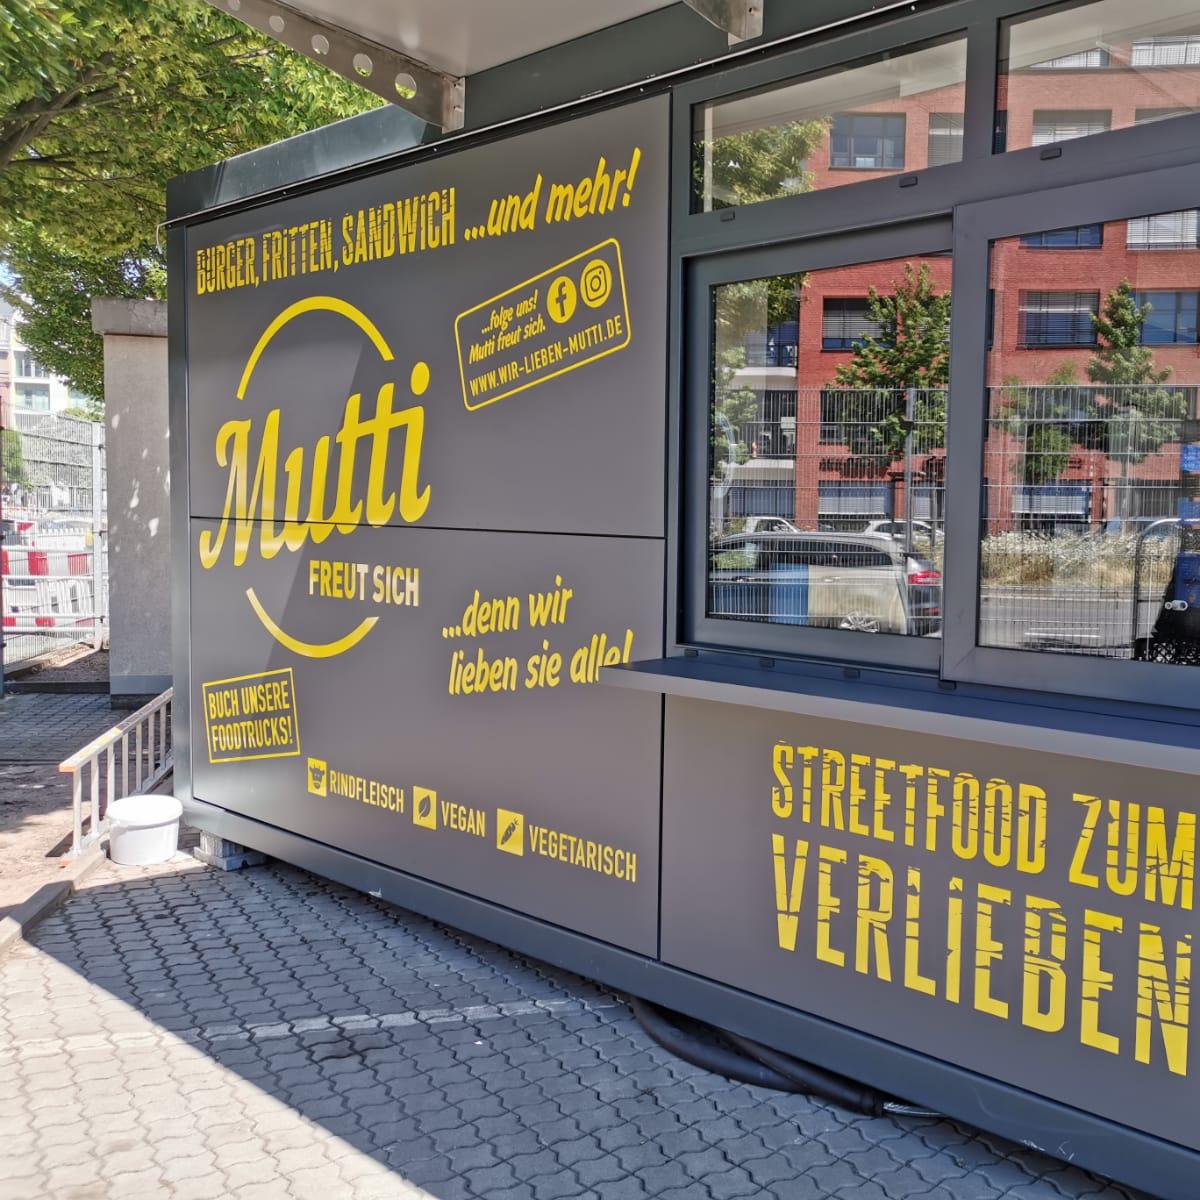 Restaurant "Mutti freut sich" in Frankfurt am Main